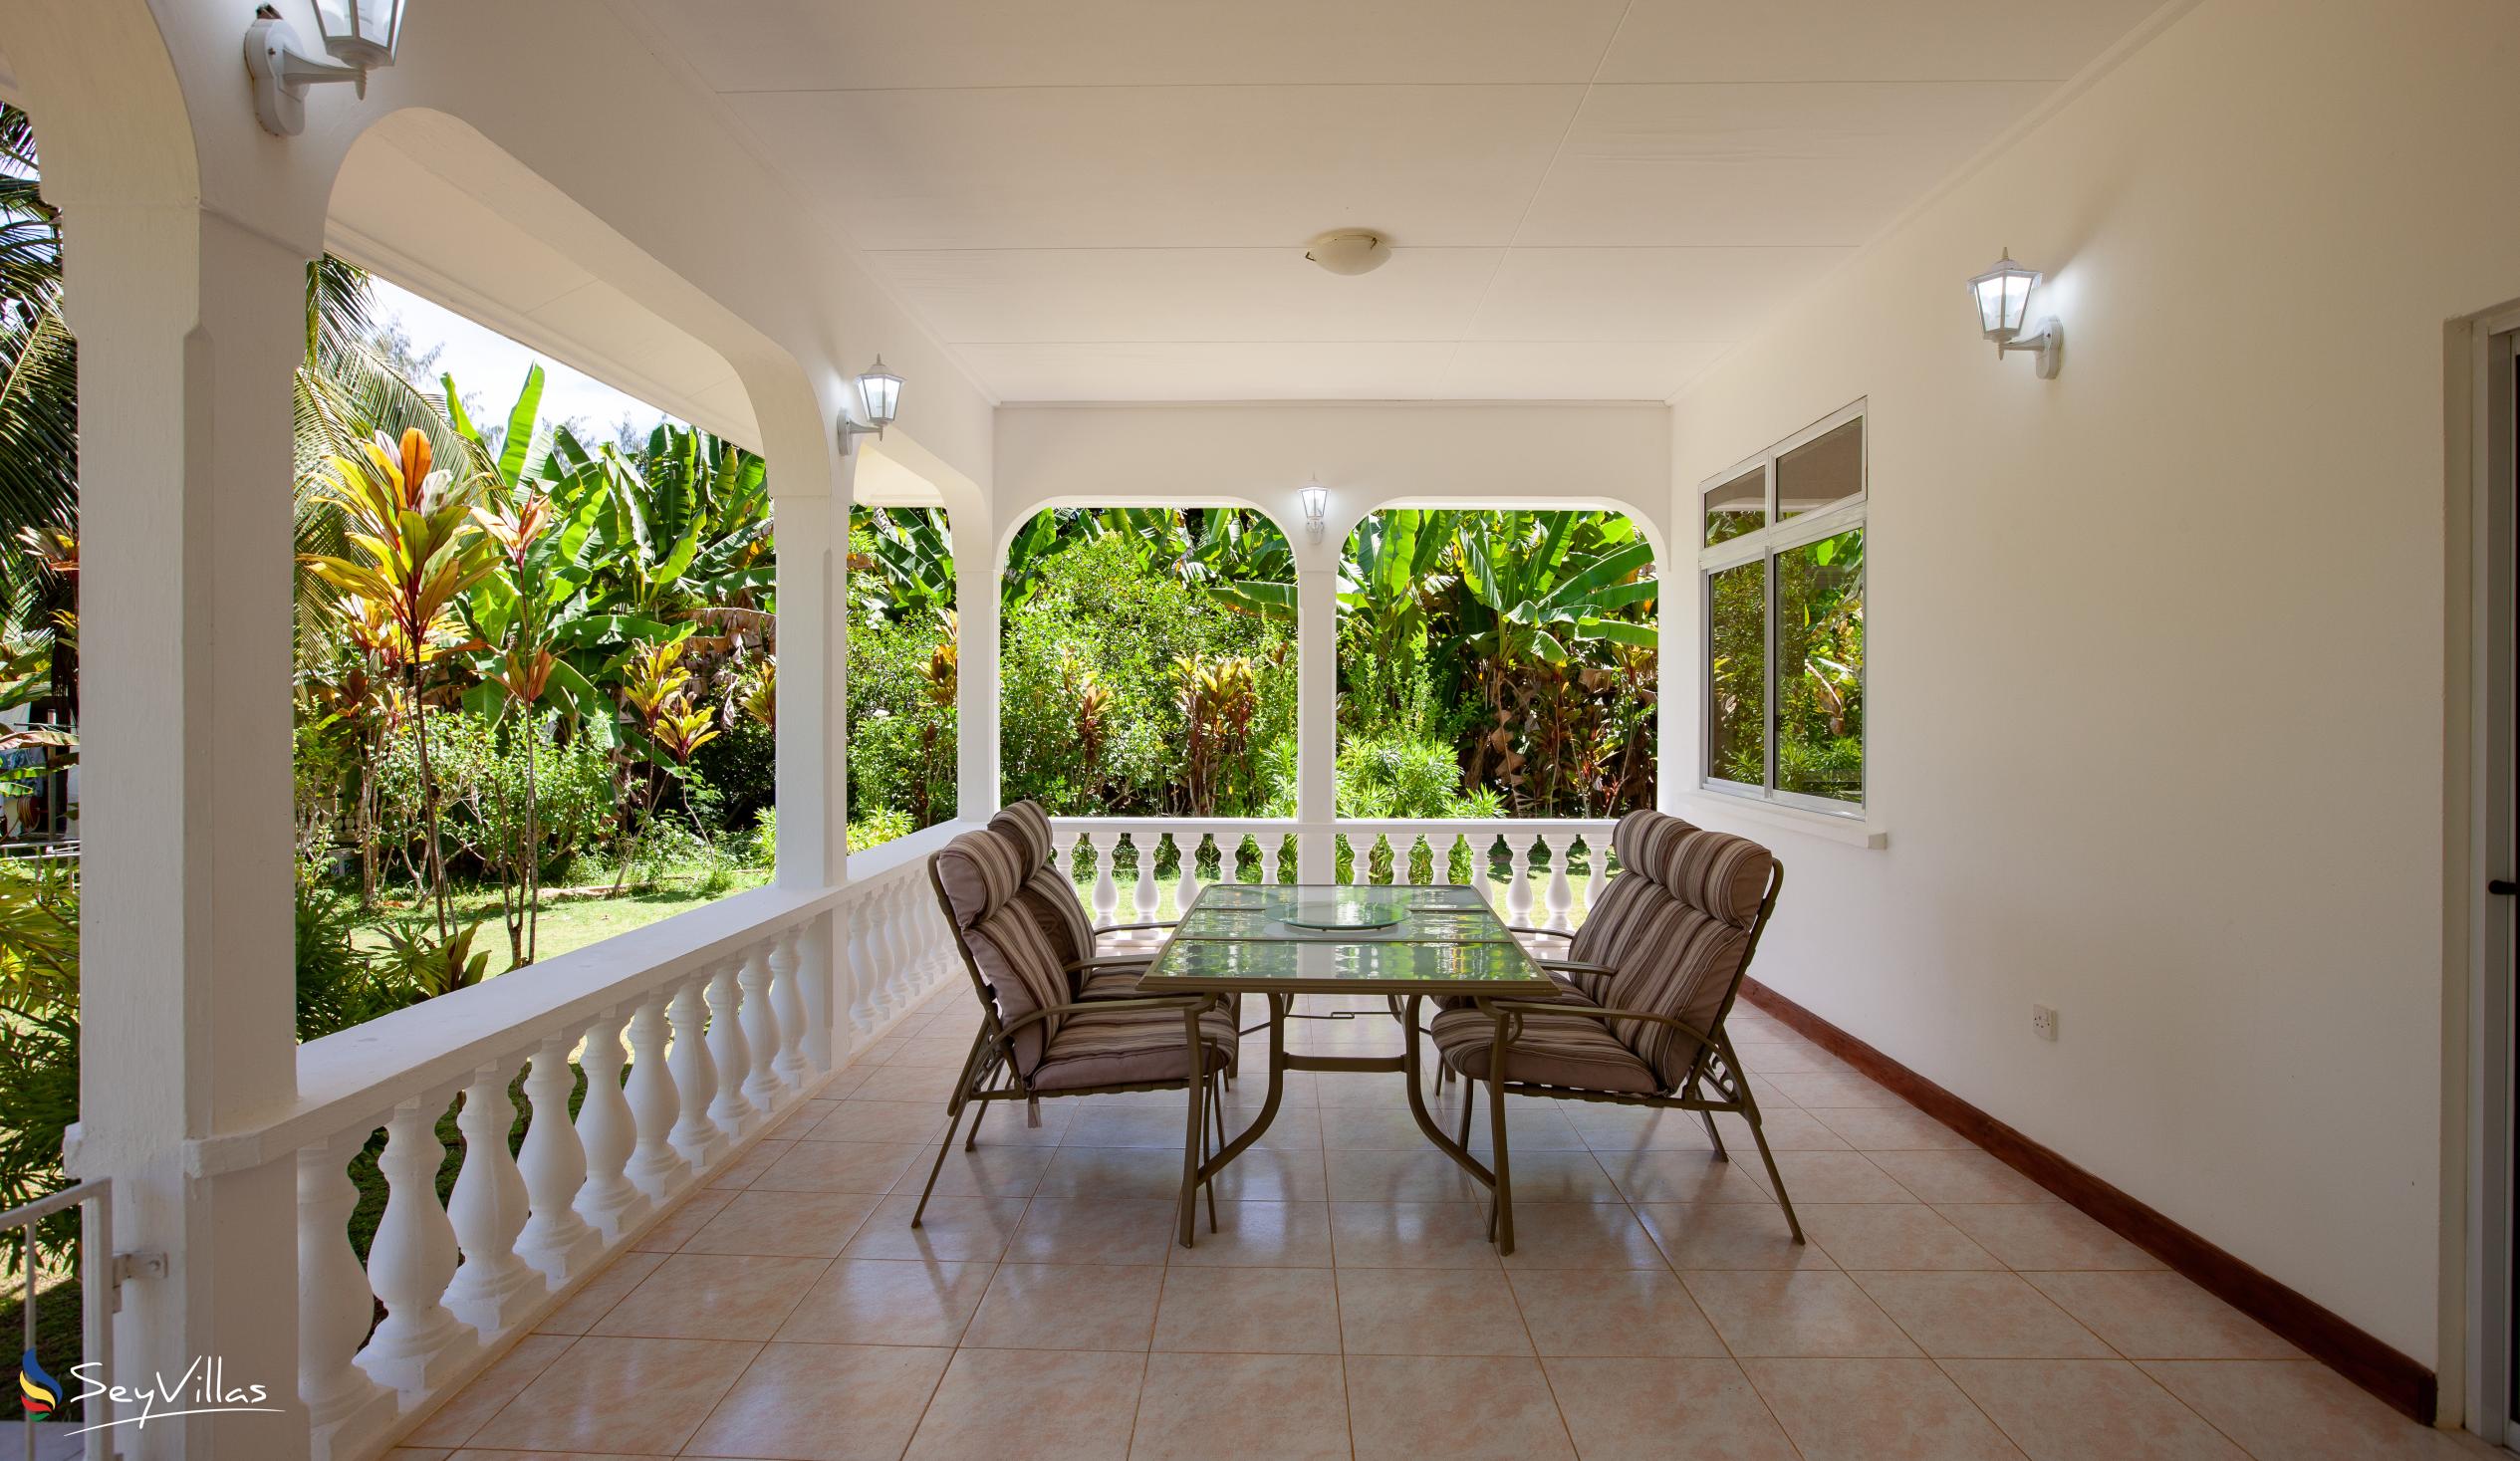 Foto 35: Le Chevalier Bay Guesthouse - Innenbereich - Praslin (Seychellen)